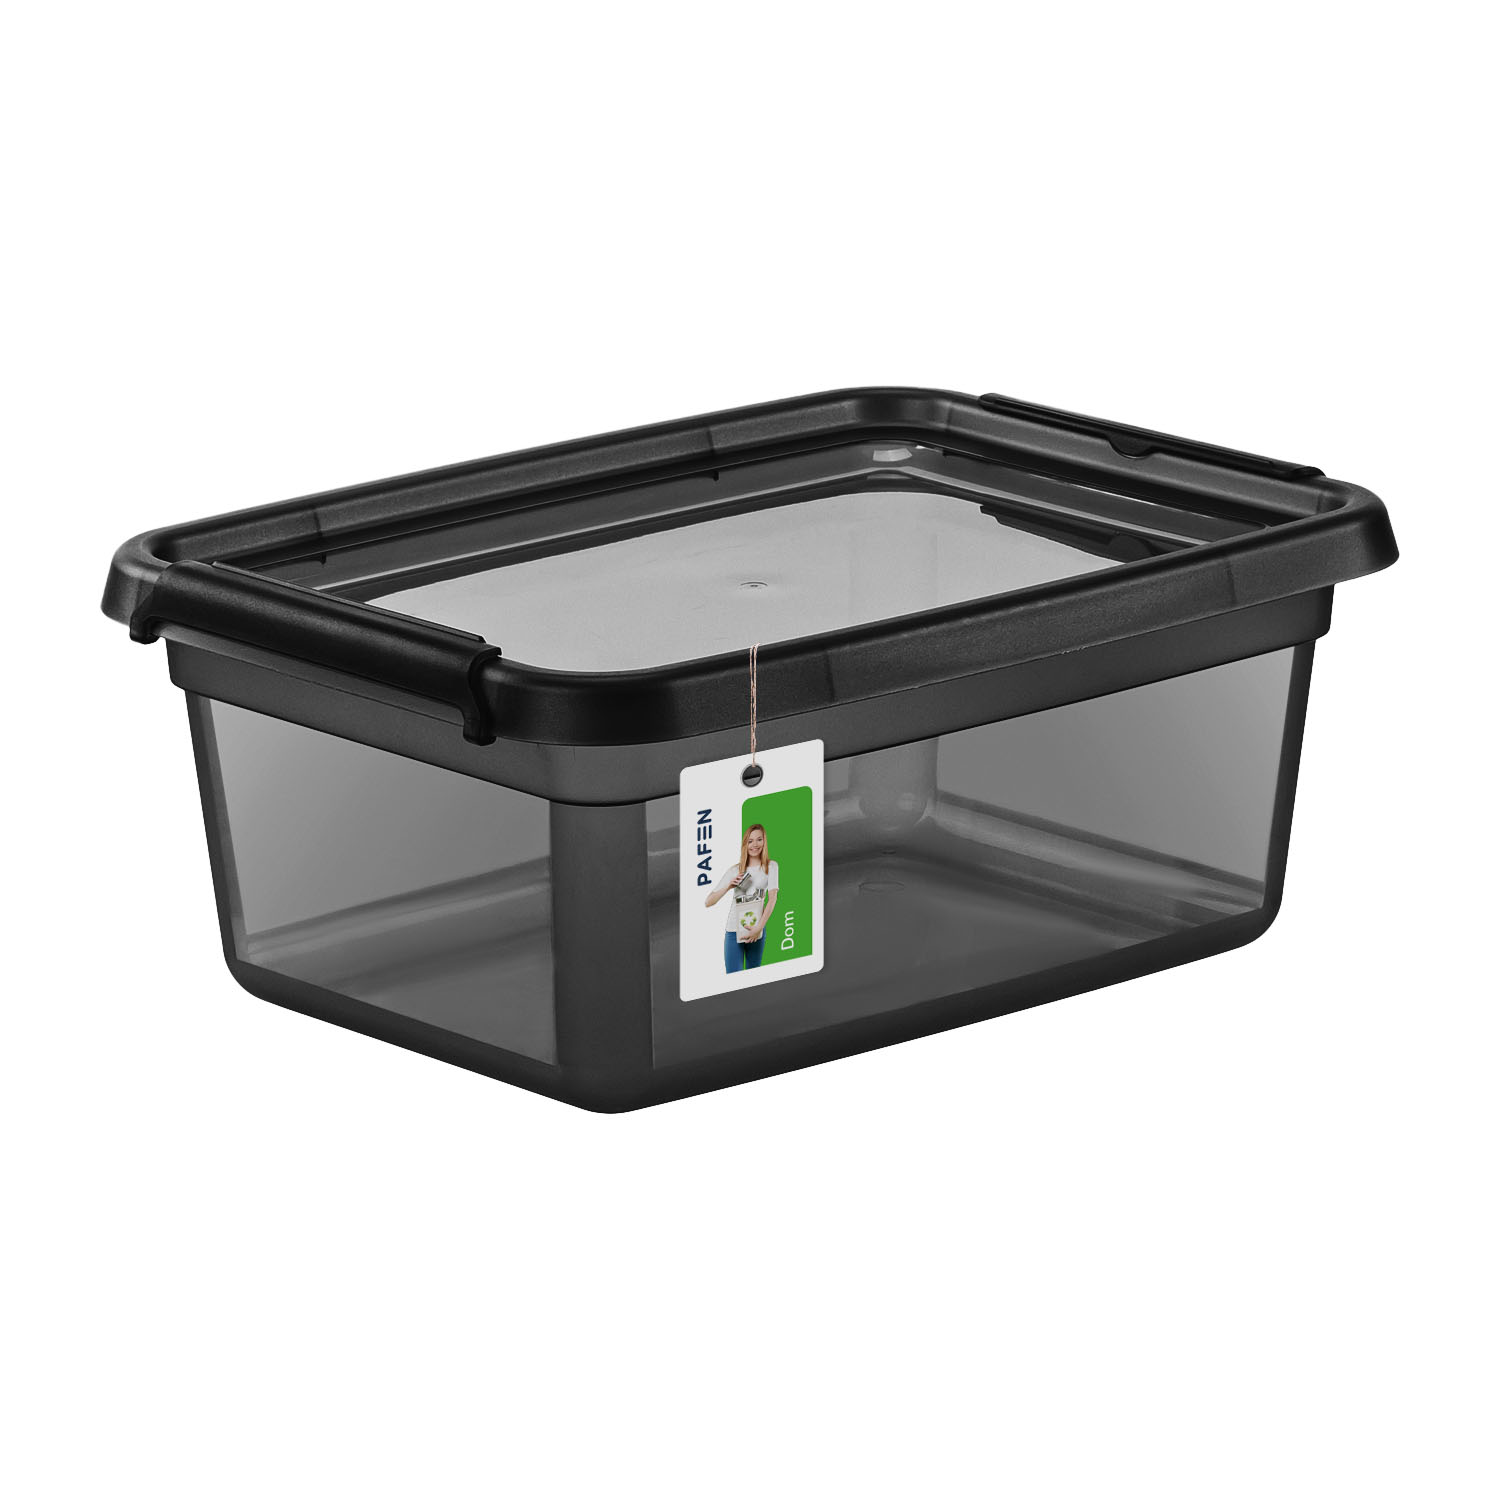 BaseStore Color 2522 Transparent black storage container